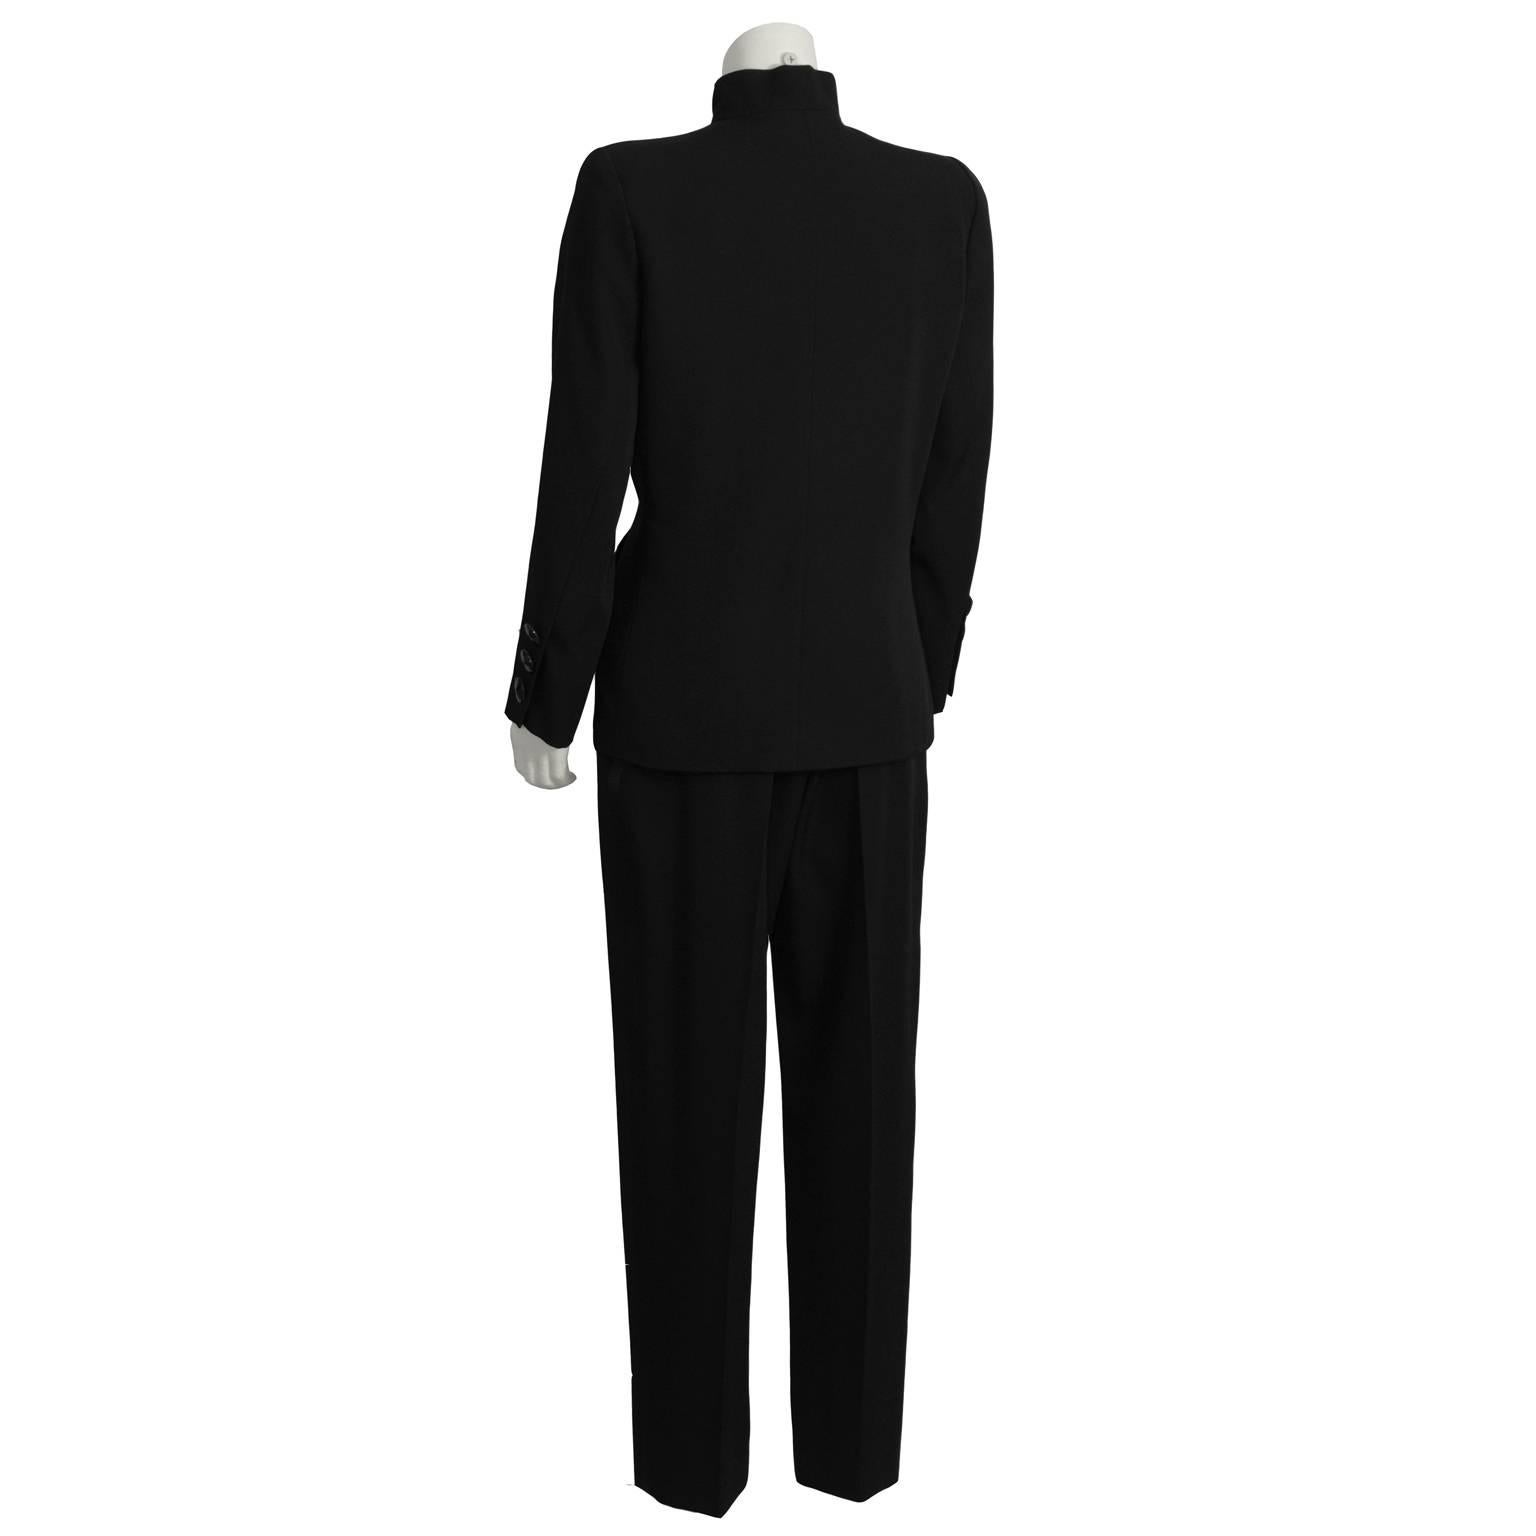 smoking evening ensemble comprising tuxedo-style jacket and pants and black silk chiffon blouse